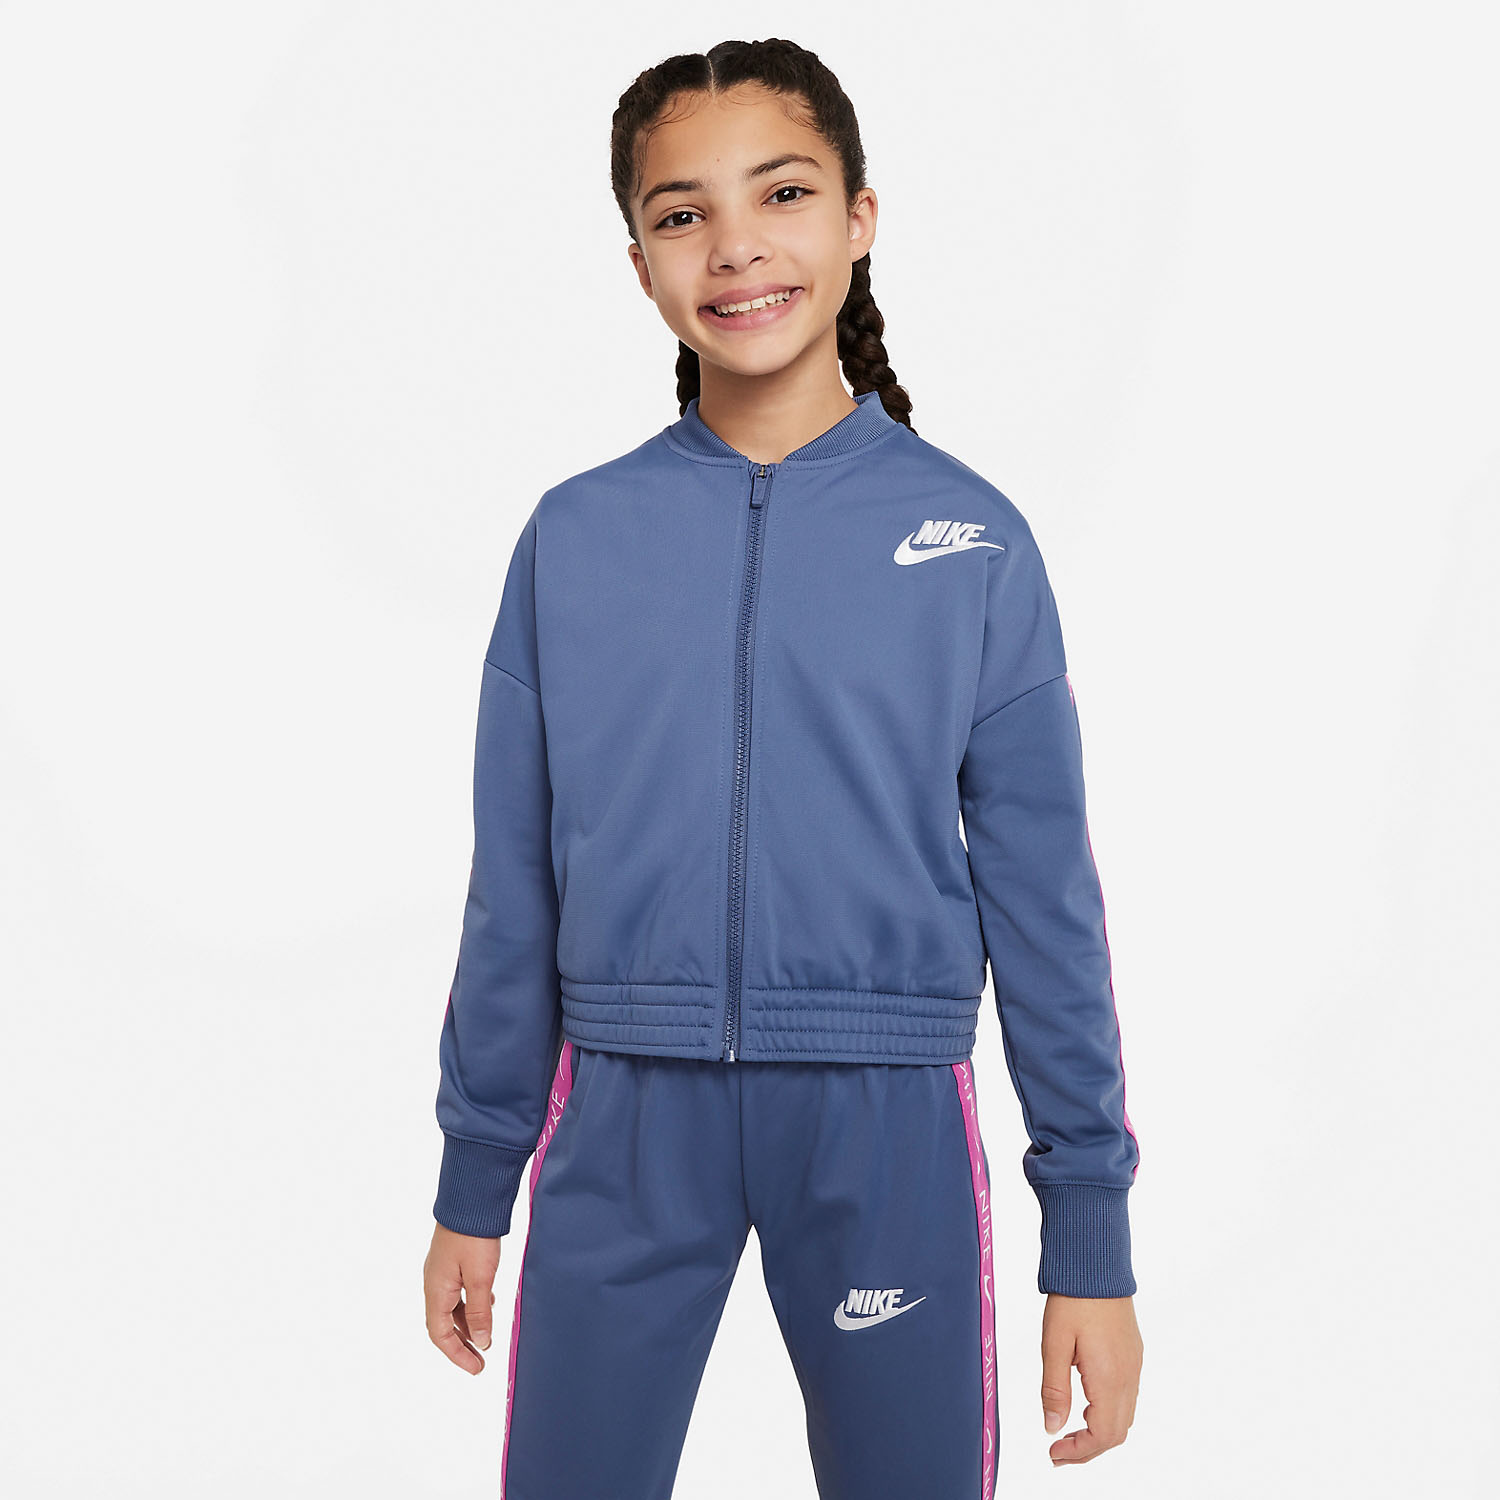 Nike Classic Girl's Tennis Bodysuit Diffused Blue/Active Fuchsia